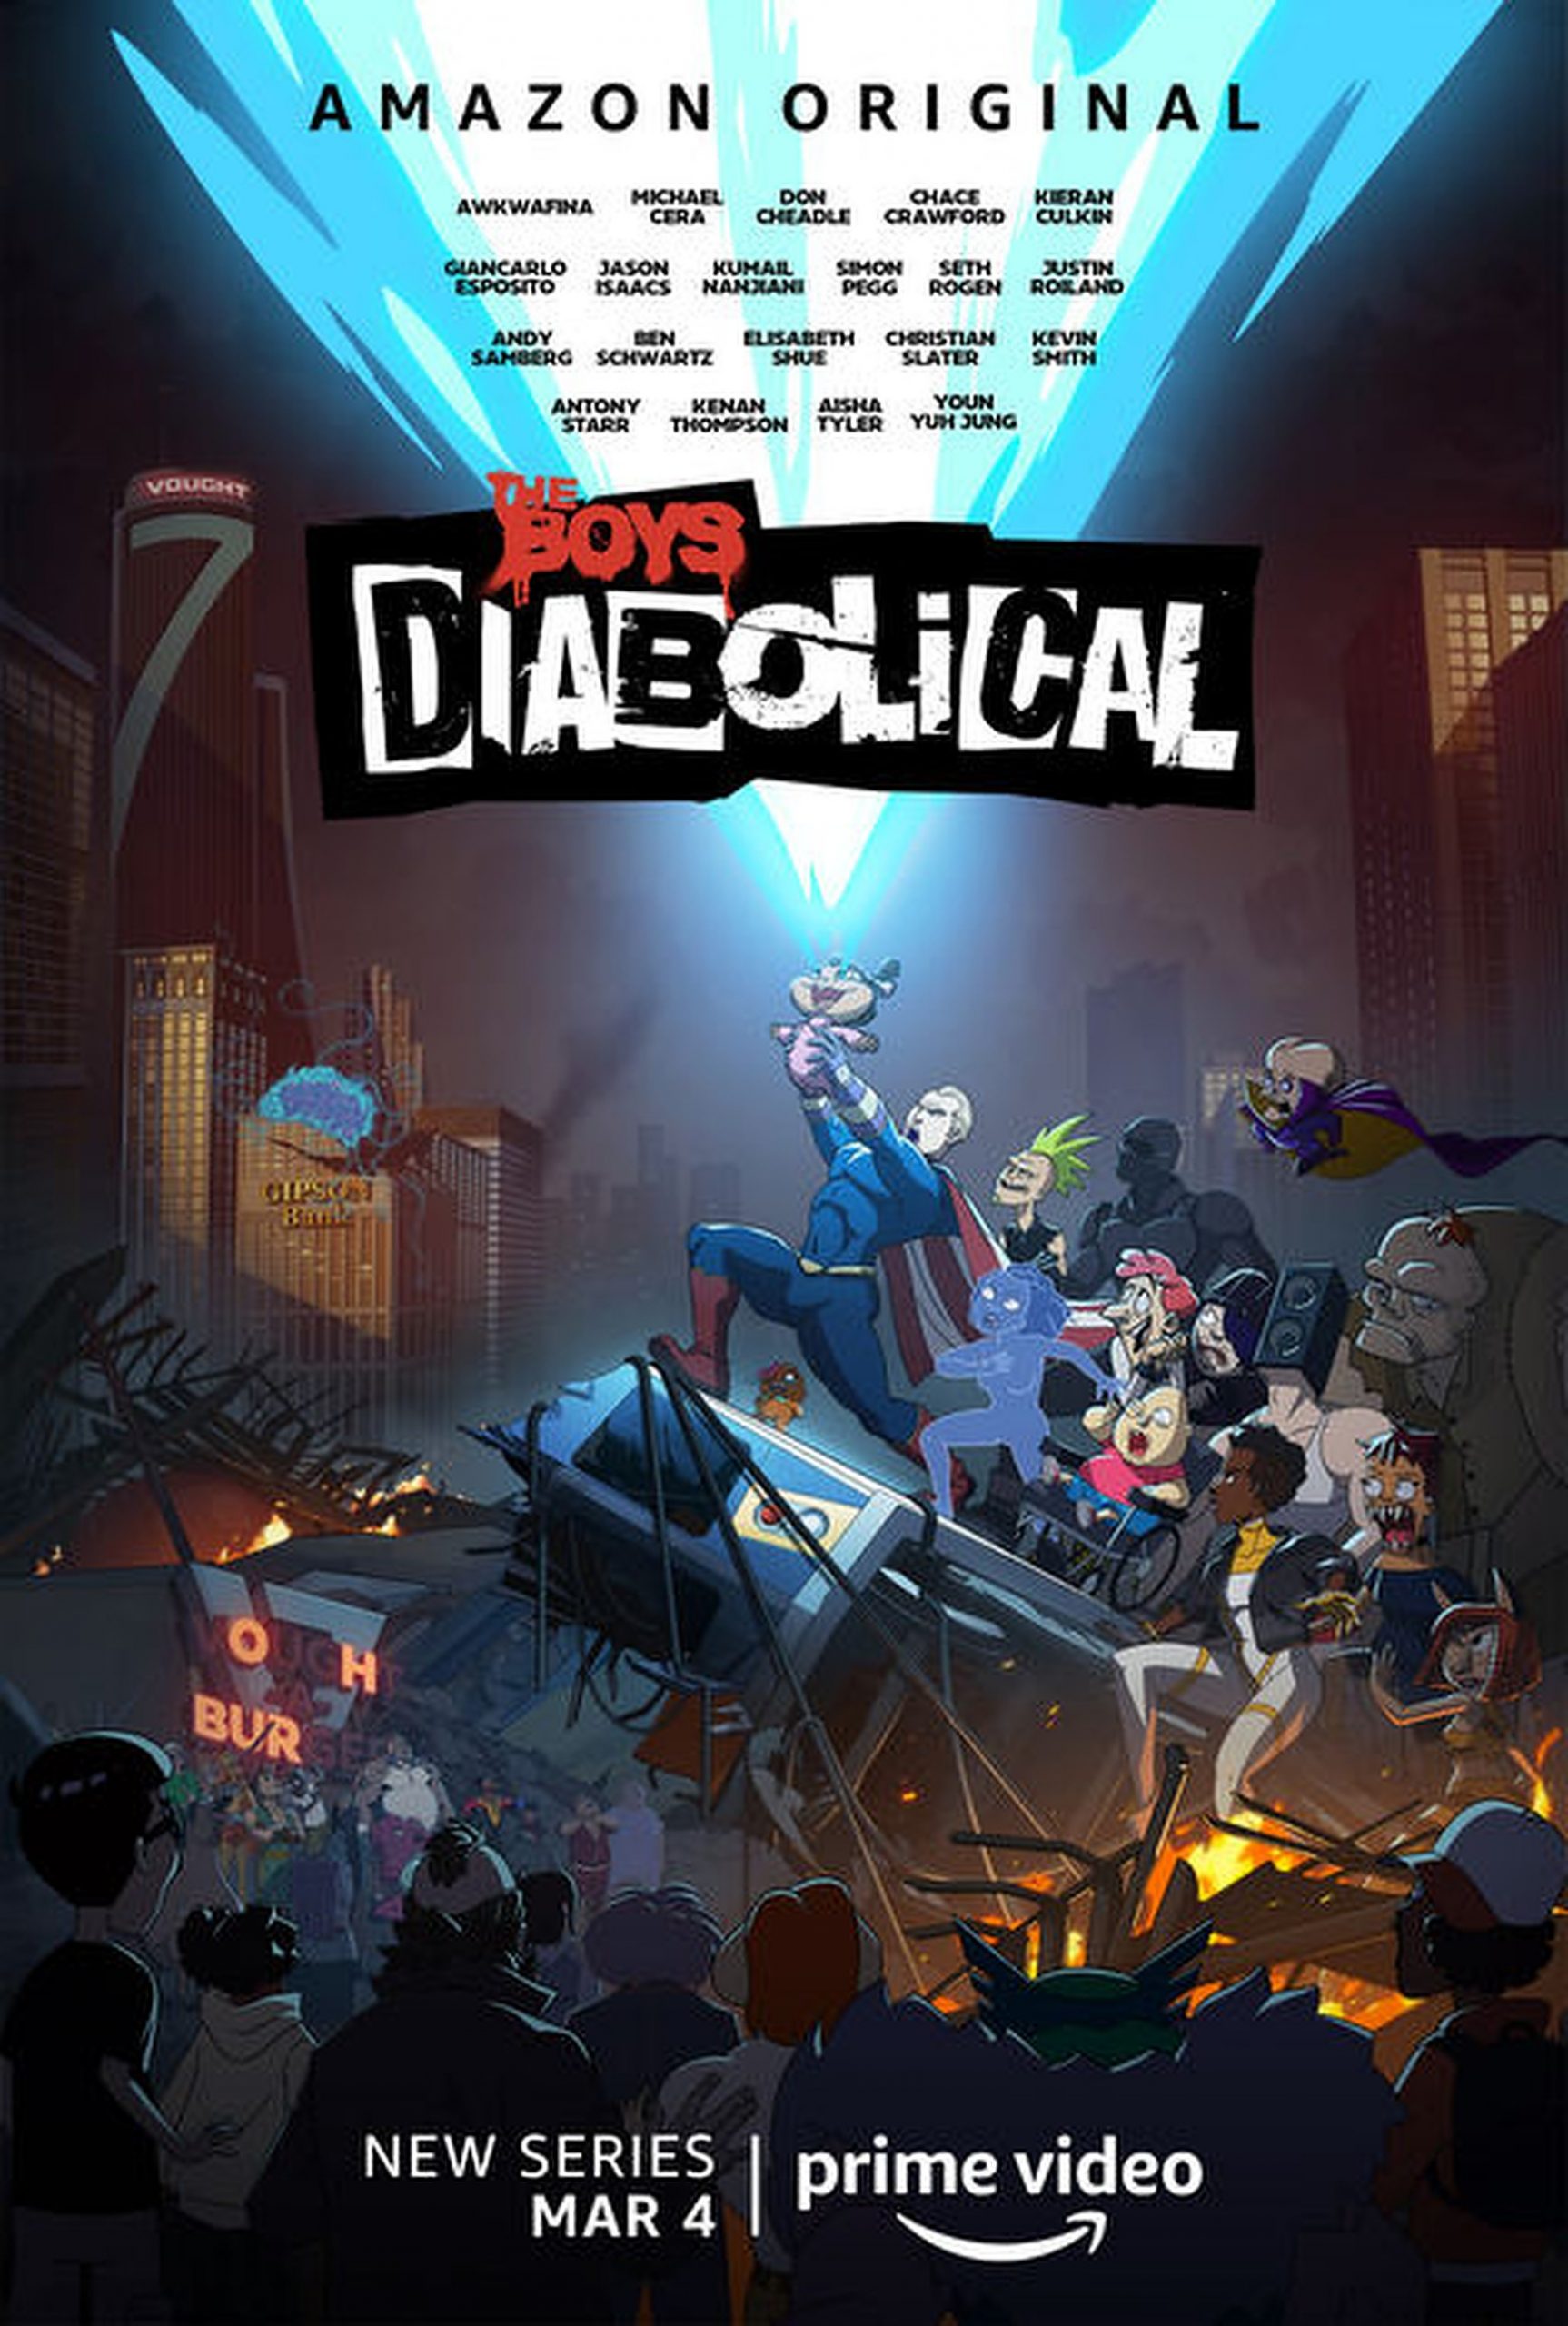 Amazon releases full trailer & episode descriptions for 'The Boys Presents: Diabolical'